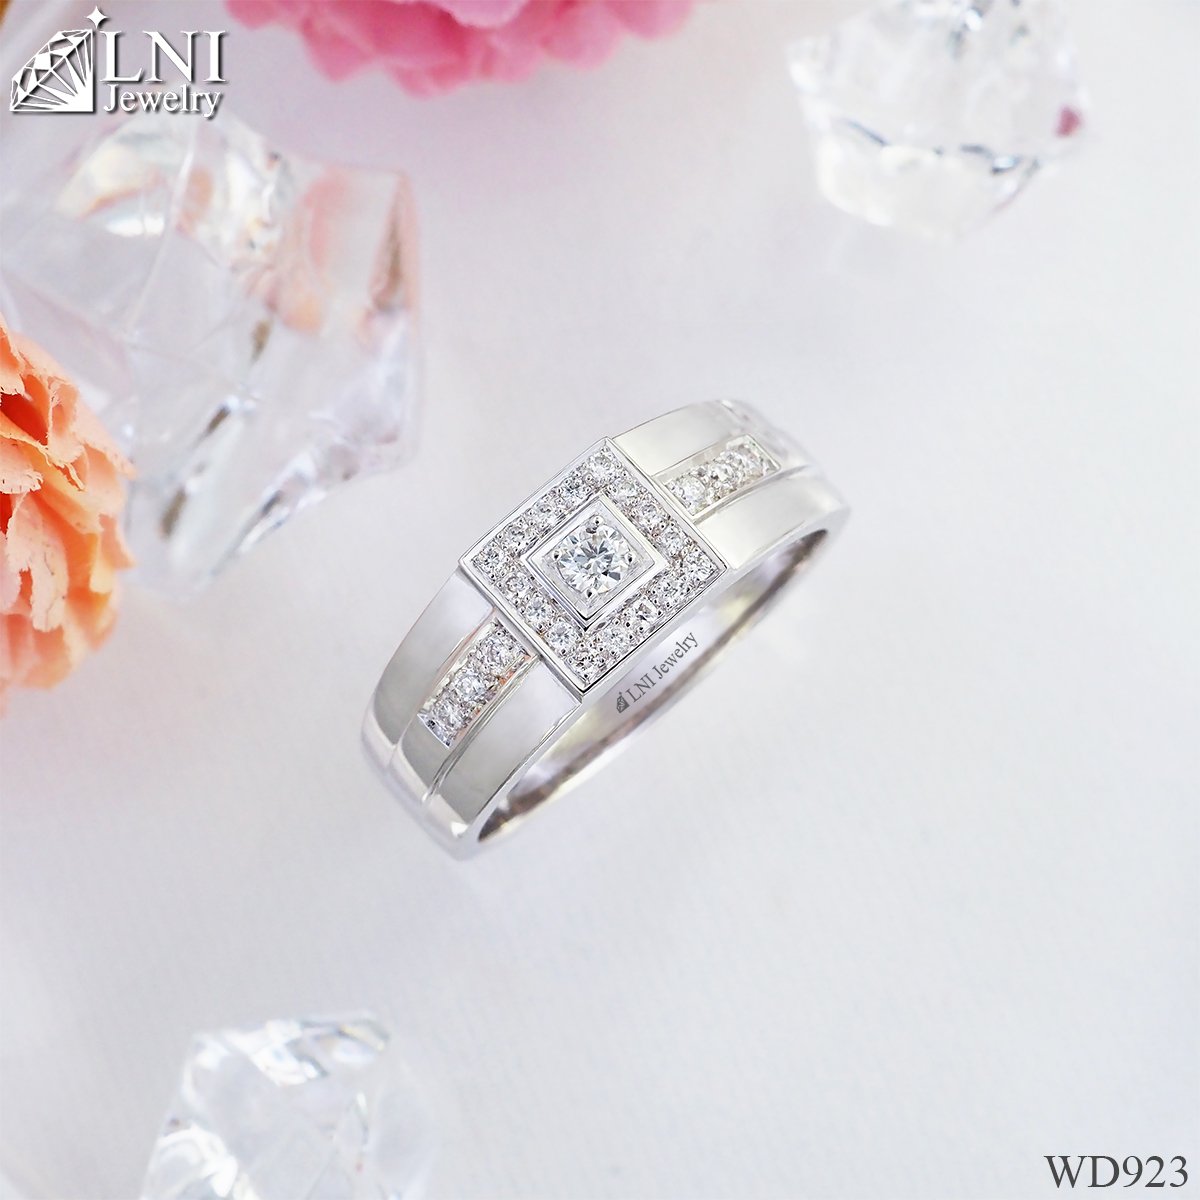 WD923 Diamond Ring